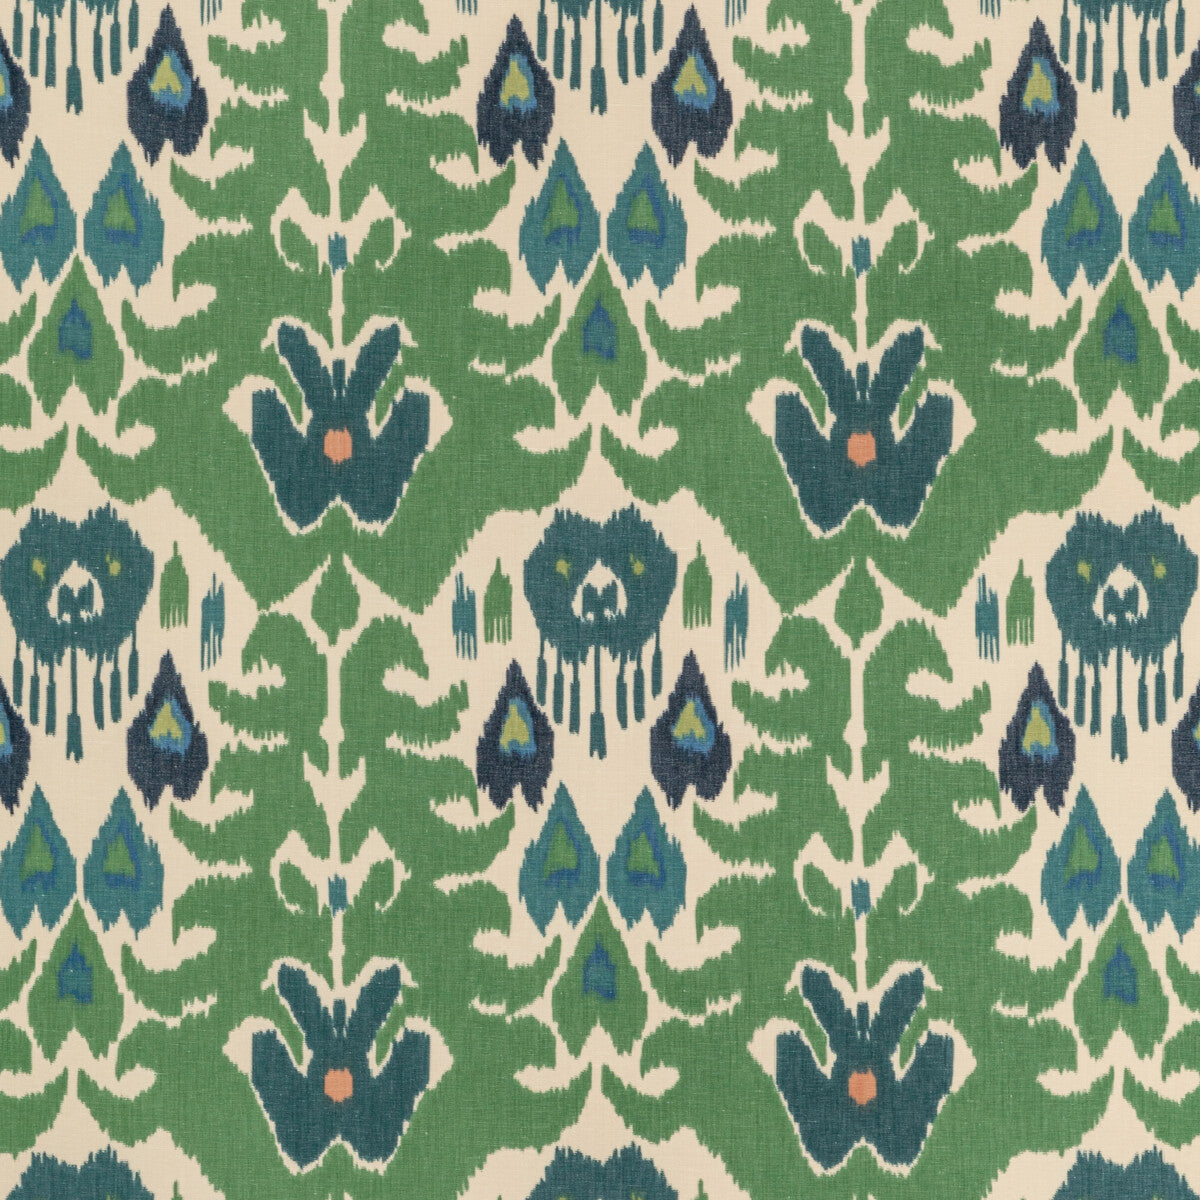 Marco Polo fabric in green/navy color - pattern 2012144.350.0 - by Lee Jofa in the Oscar De La Renta II collection